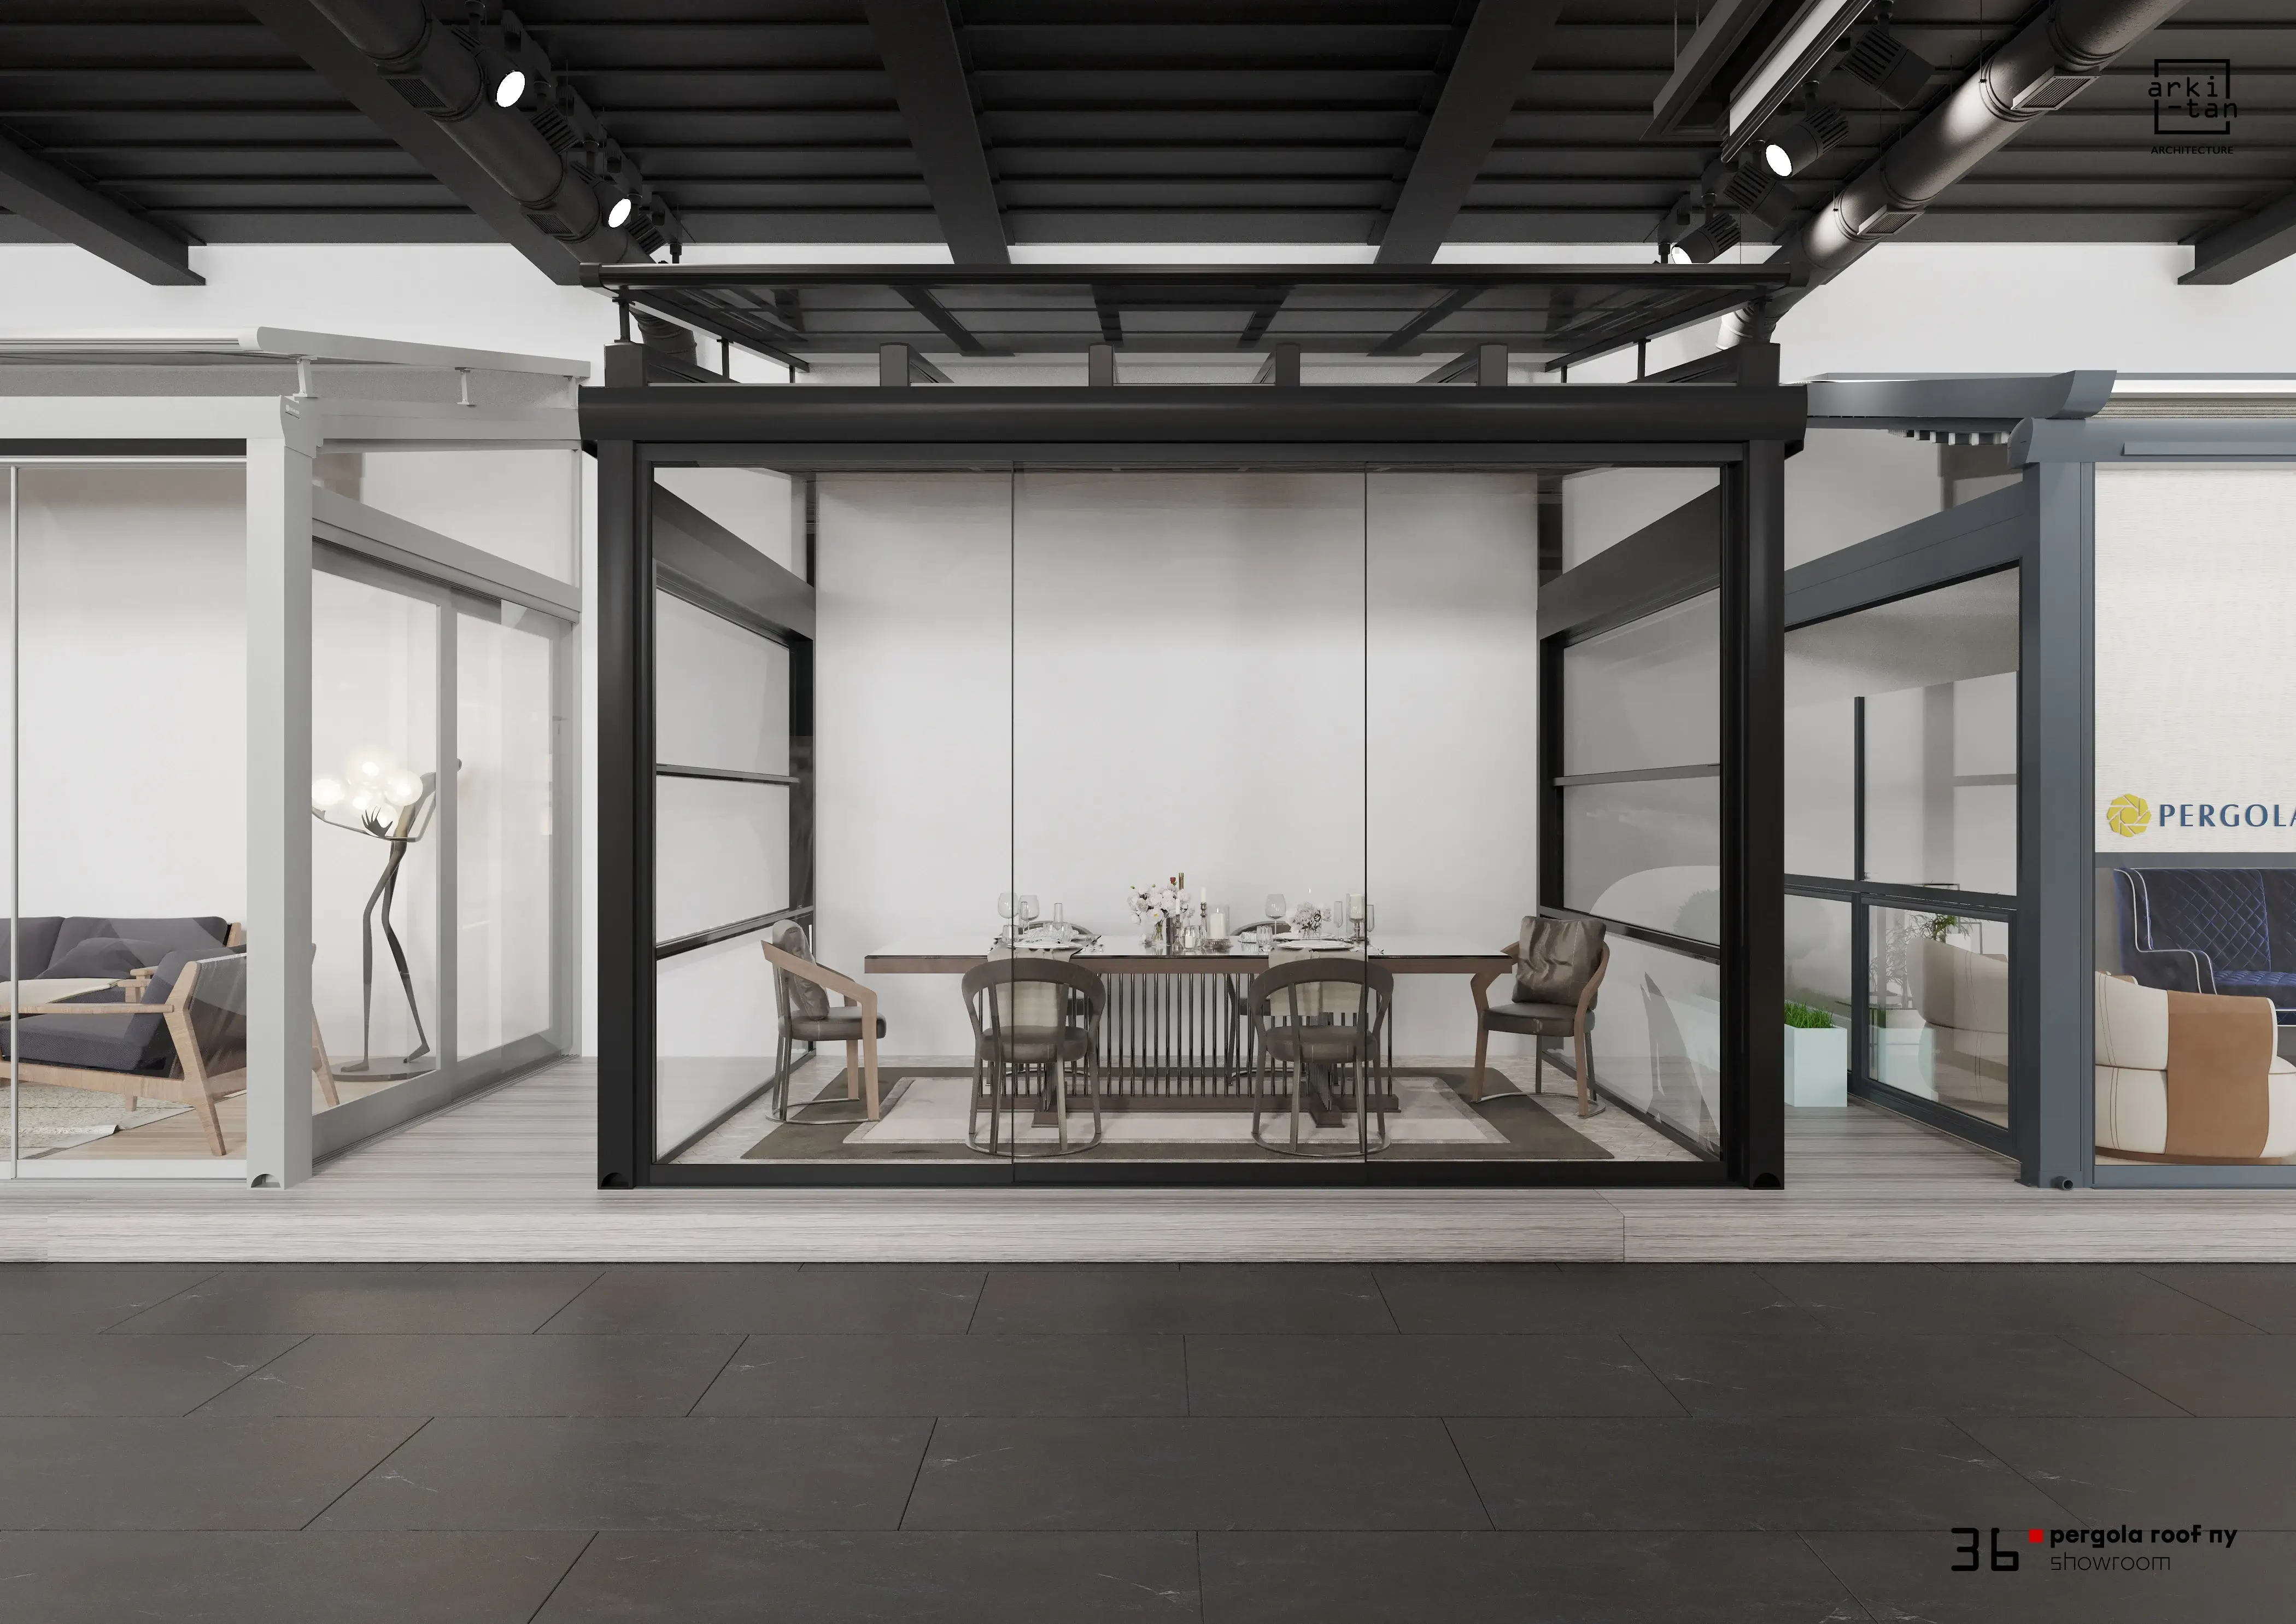 Pergola Roof Showroom, Custom Sunroom with guillotine windows